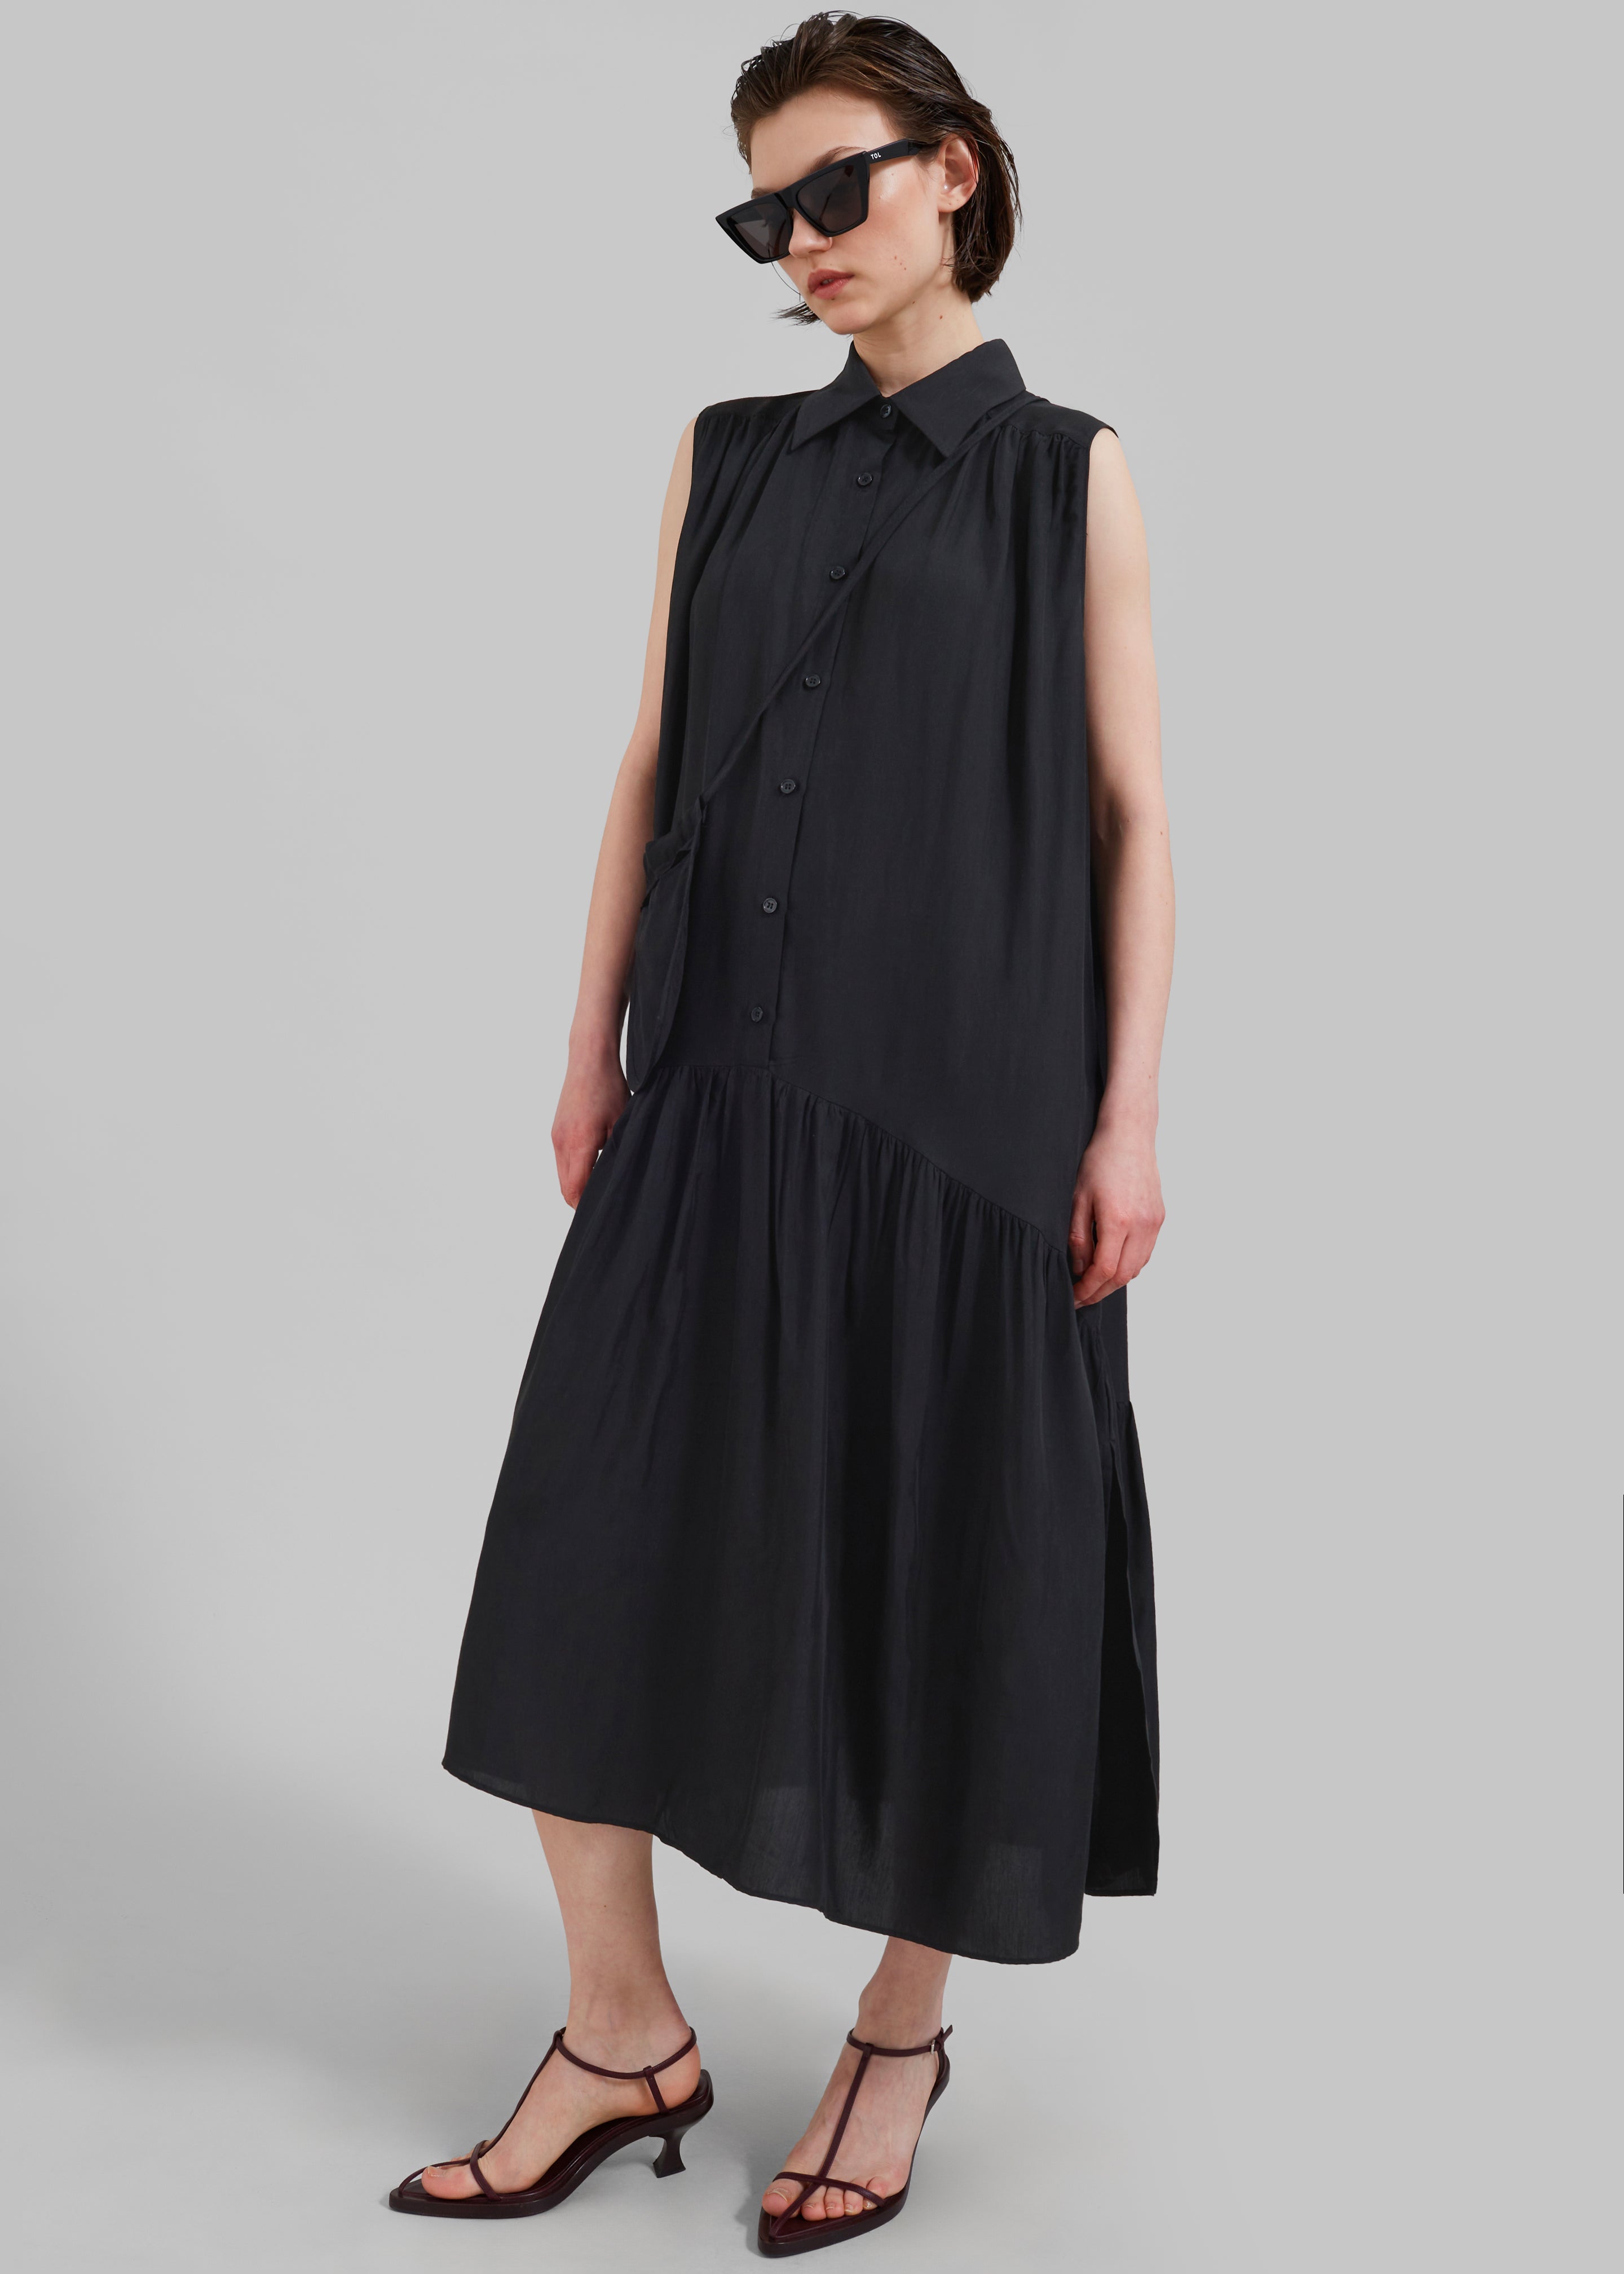 Maela Button Up Midi Dress - Black - 2